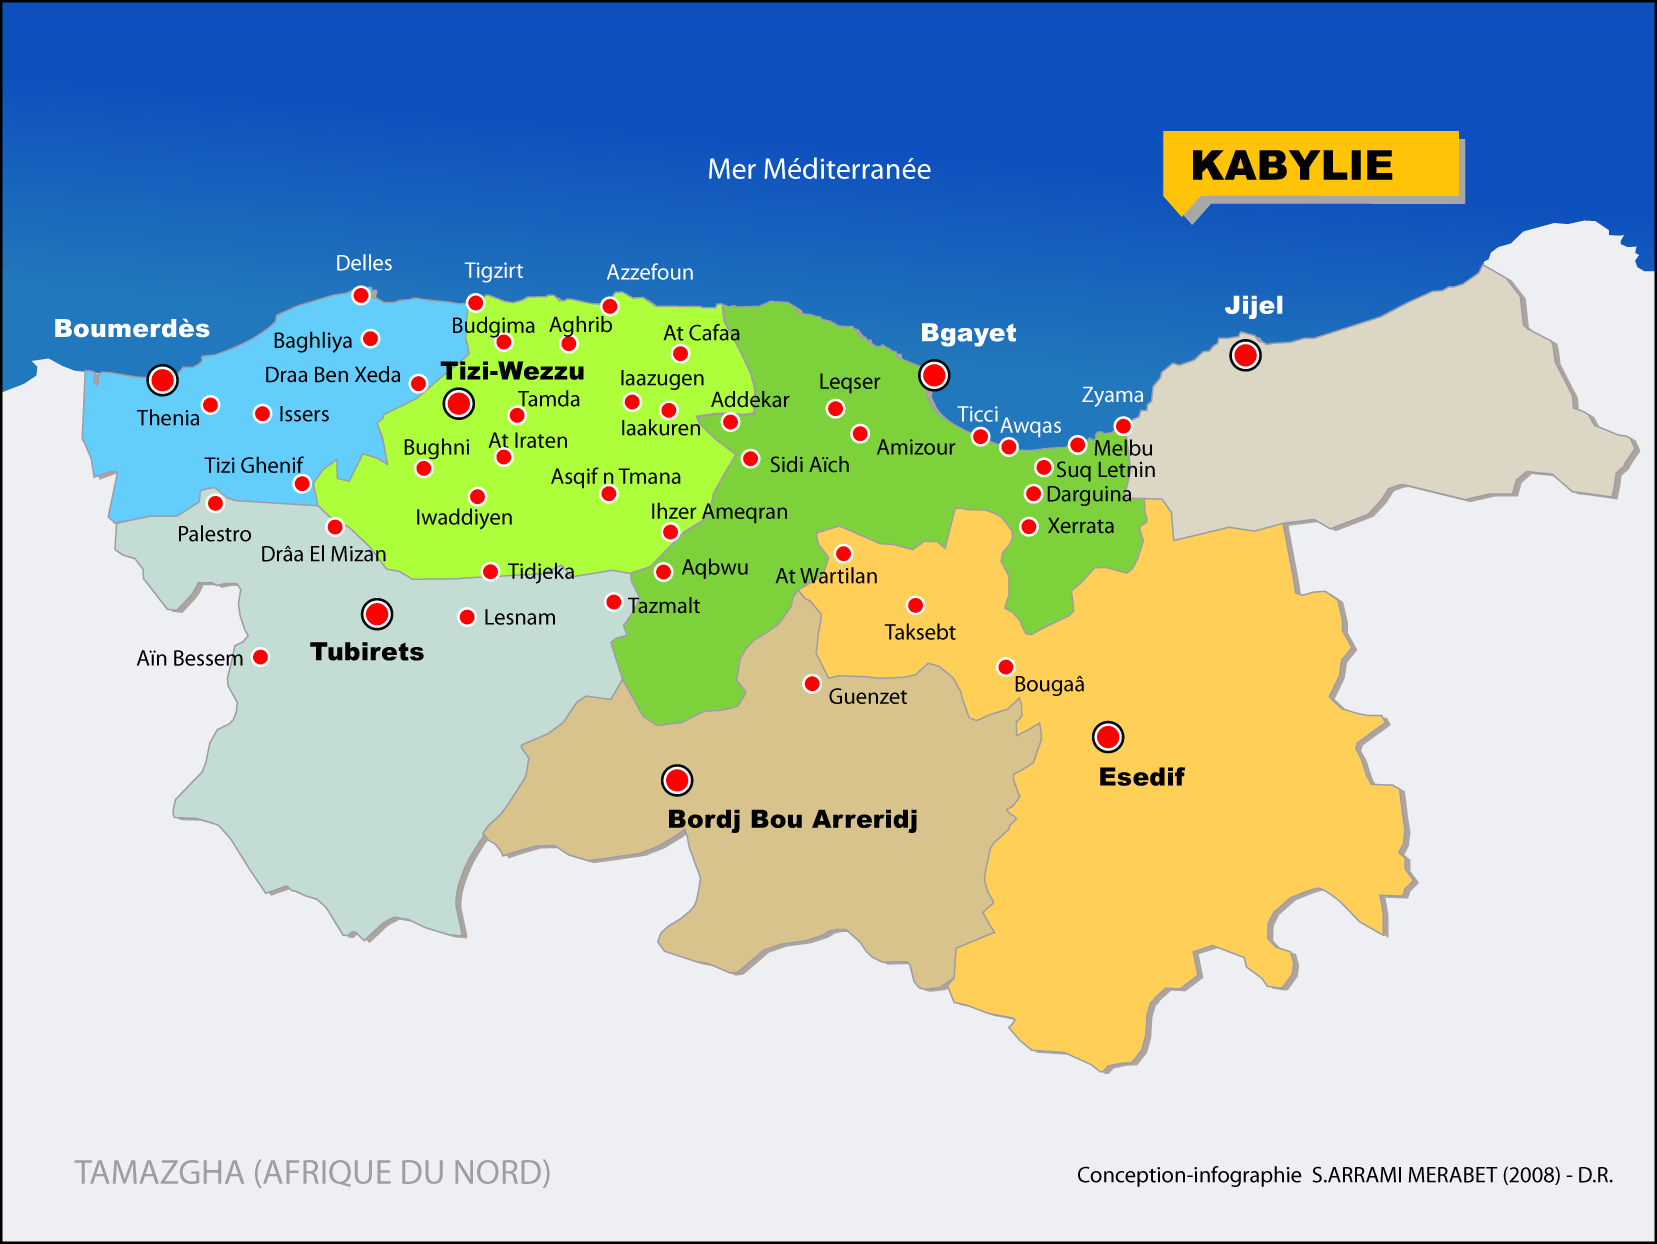 Kabylia Map, Algeria - BerberoSaharan.com